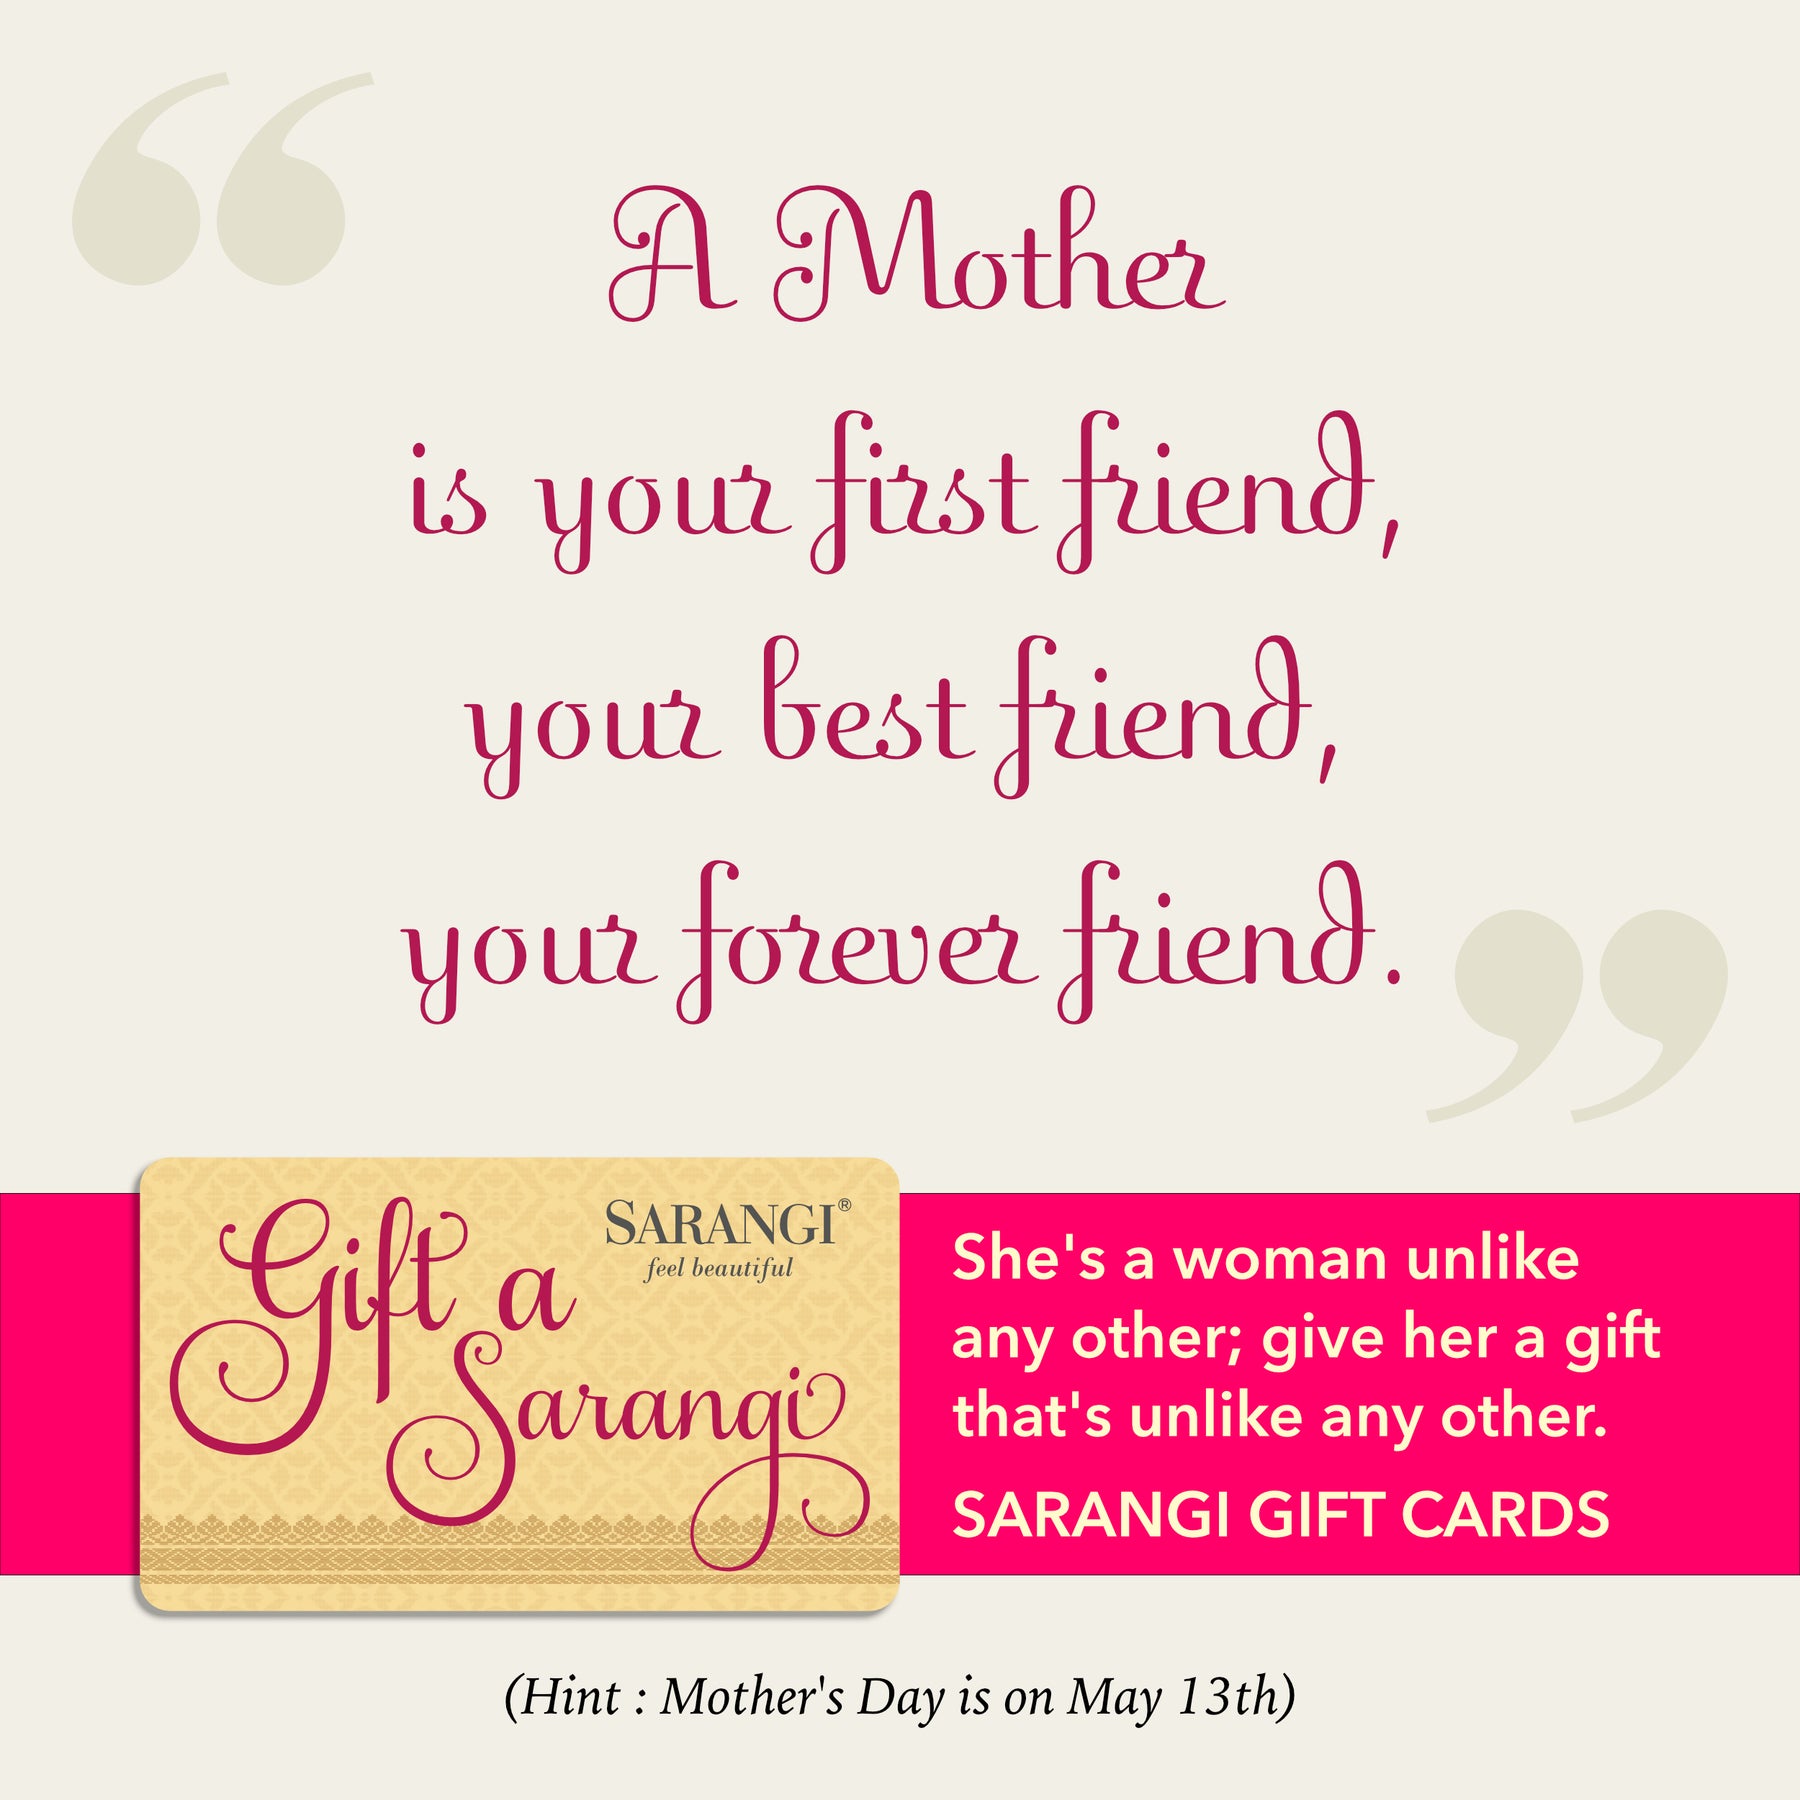 Send Mom Love; Gift Her a Sarangi Saree